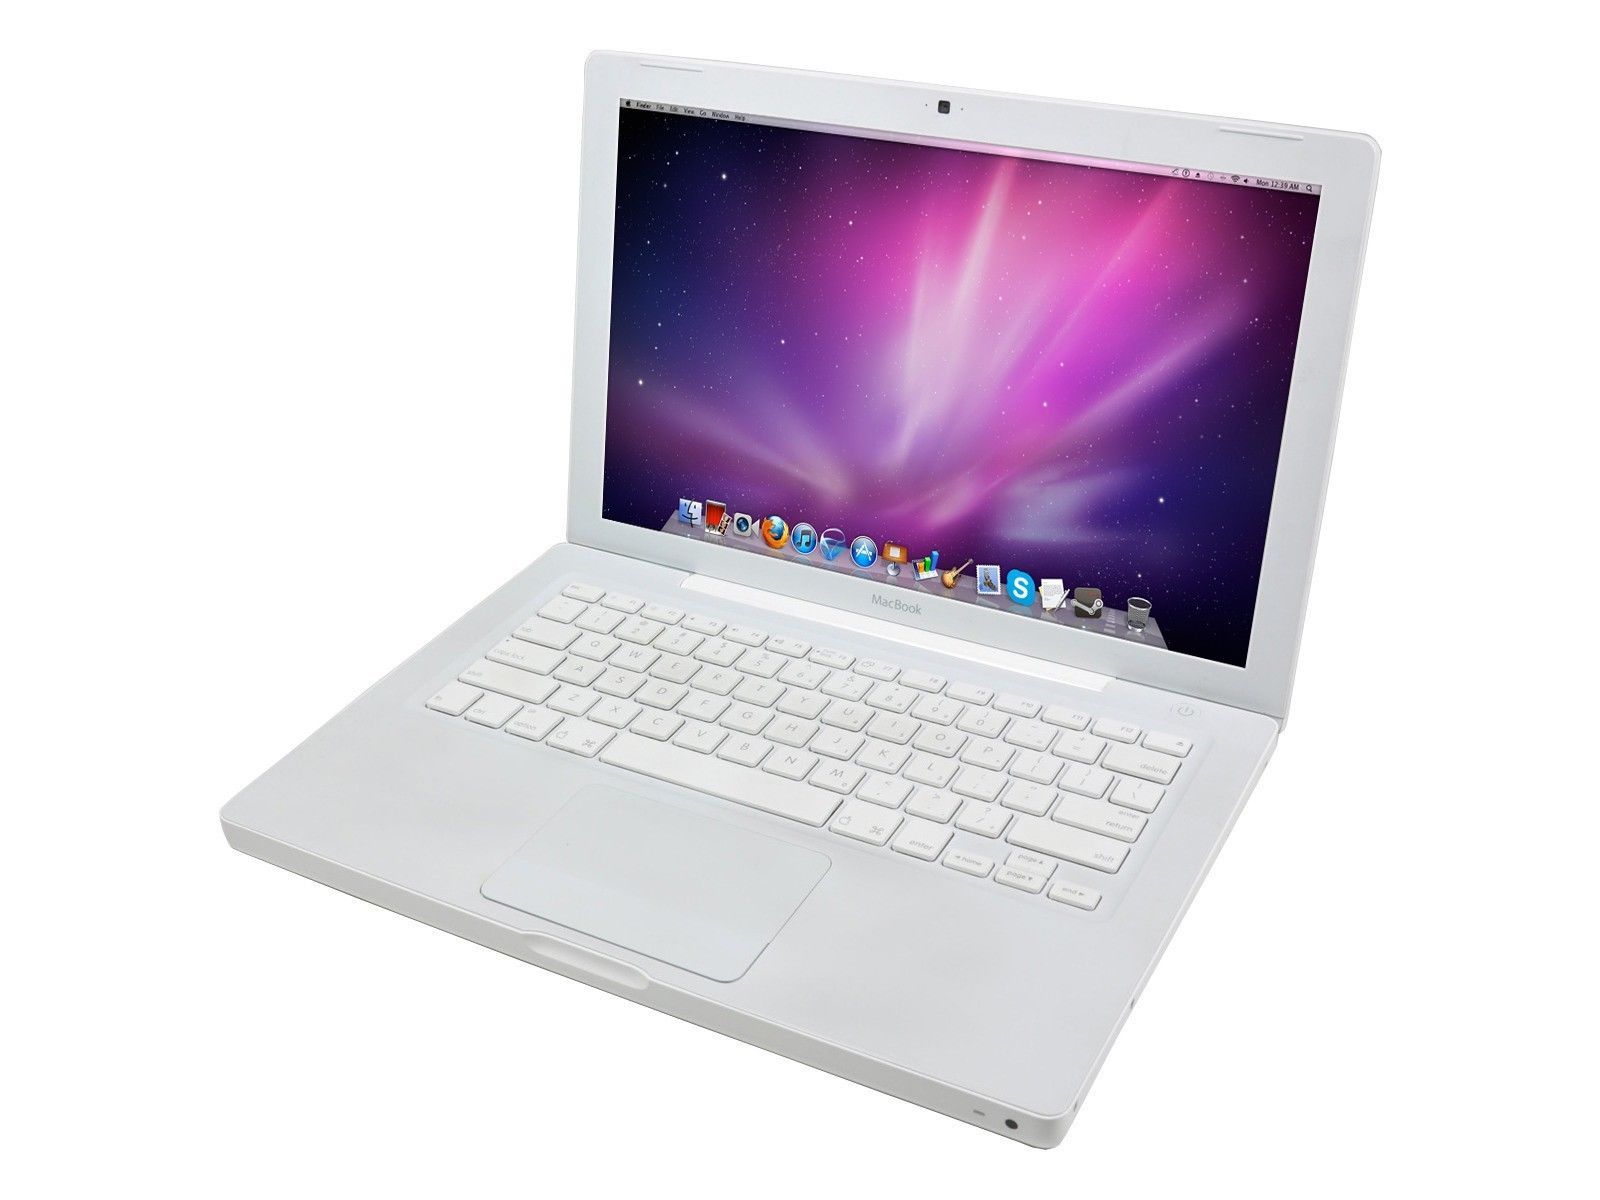 Apple MacBook Core 2 Duo 2.13Ghz 2GB RAM 160GB HD 13" MC240LL/A Office 11 - $199.95